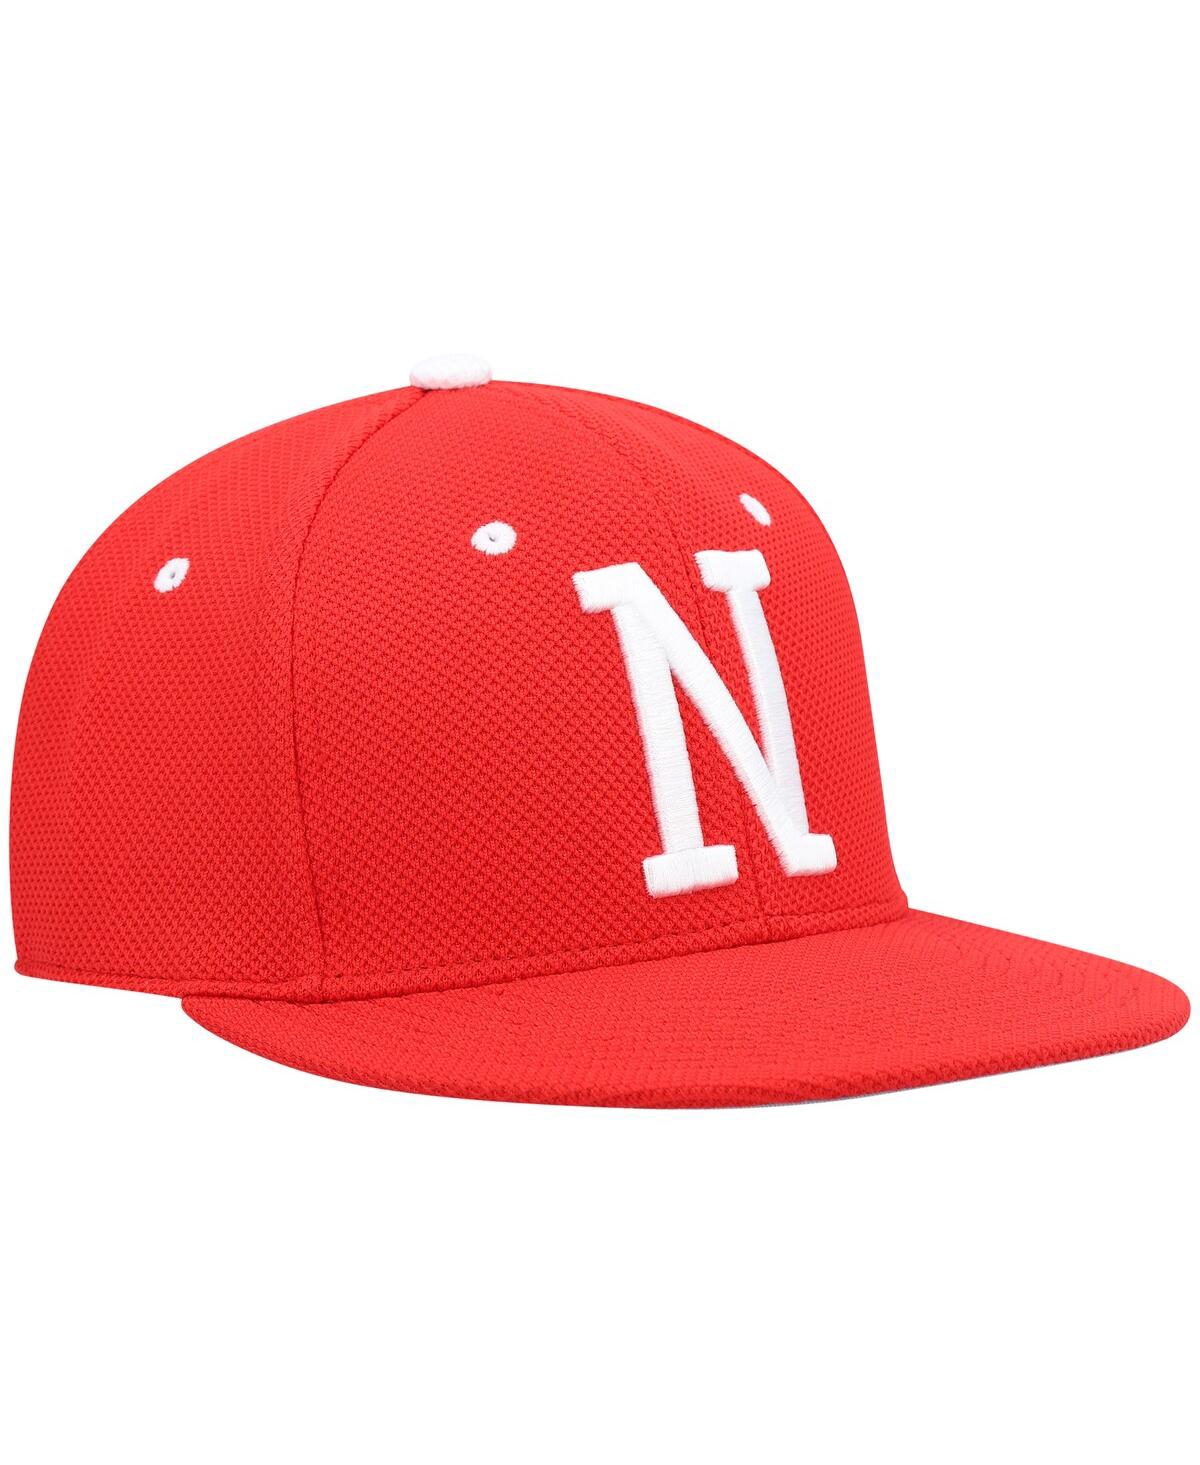 Shop Adidas Originals Men's Adidas Scarlet Nebraska Huskers On-field Baseball Fitted Hat